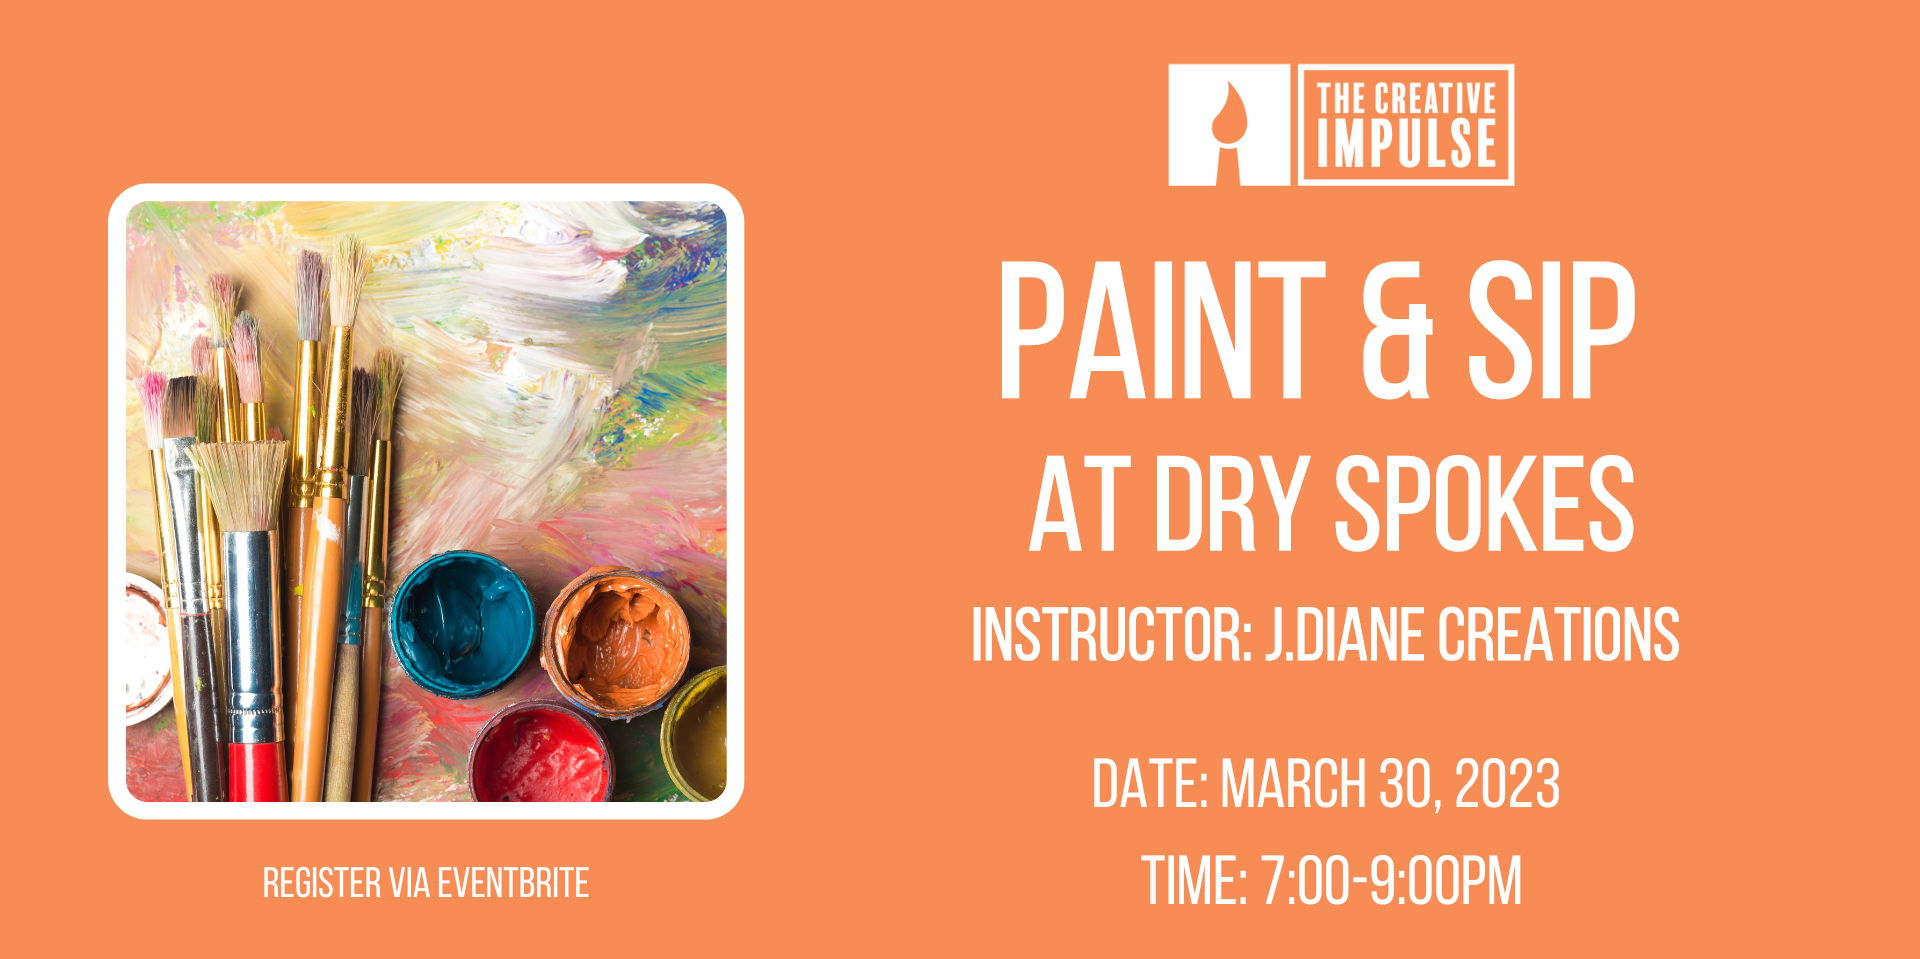 Paint & Sip Workshop at Dry Spokes promotional image